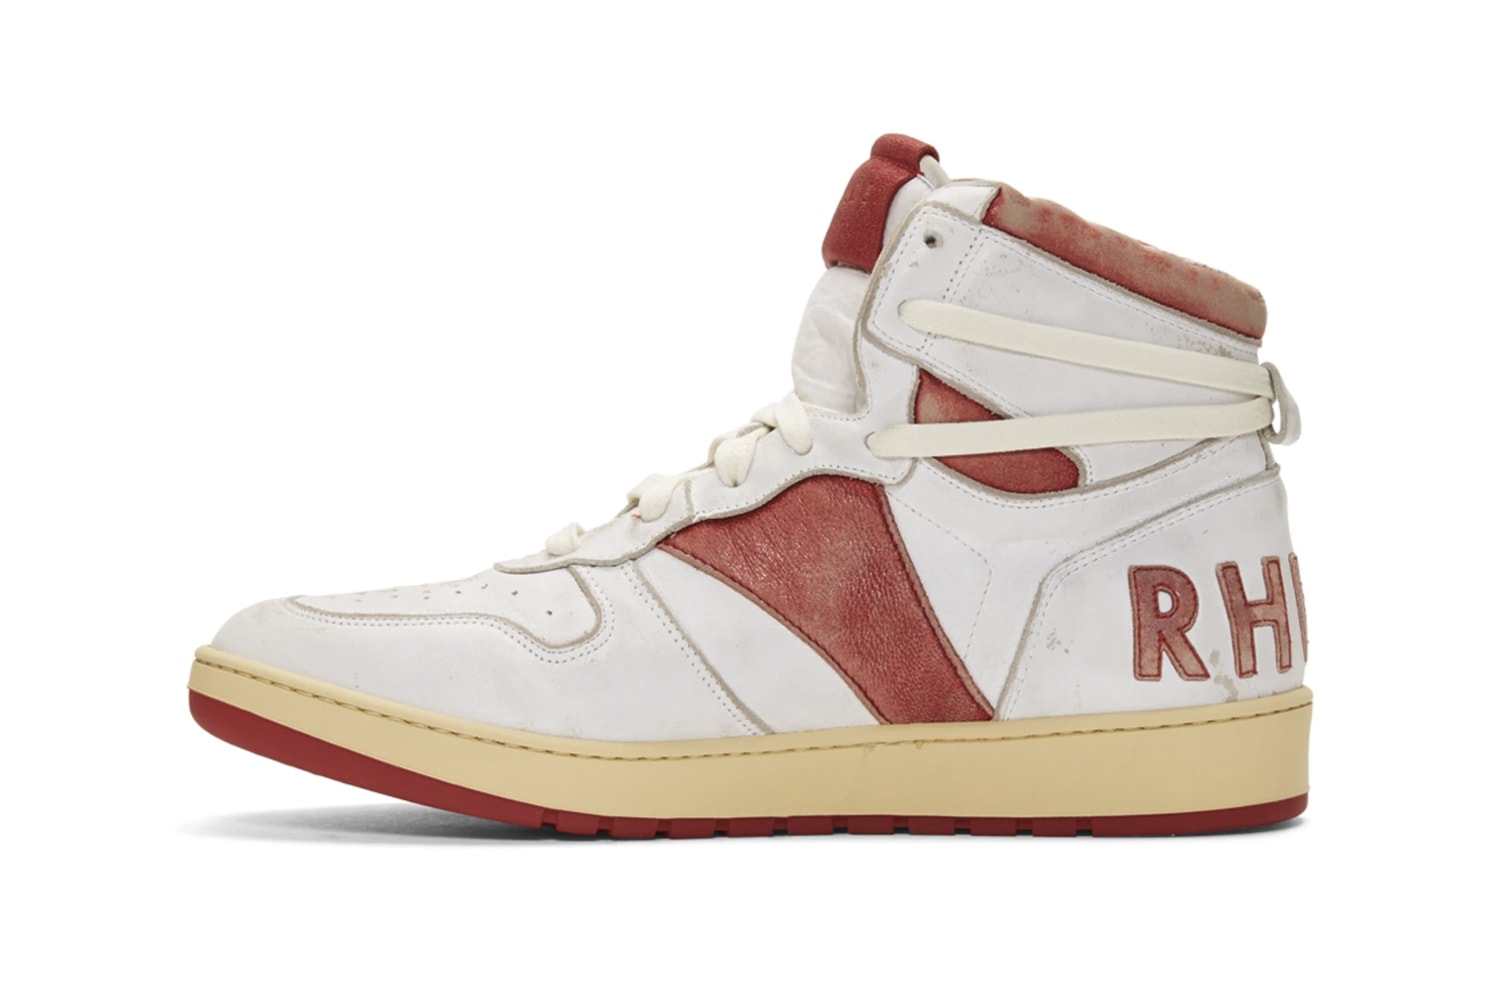 RHUDE Retro Bball-Hi Sneakers White Red Release Info Date Pricing Buy Rhuigi rhuigi villasenor Distressed